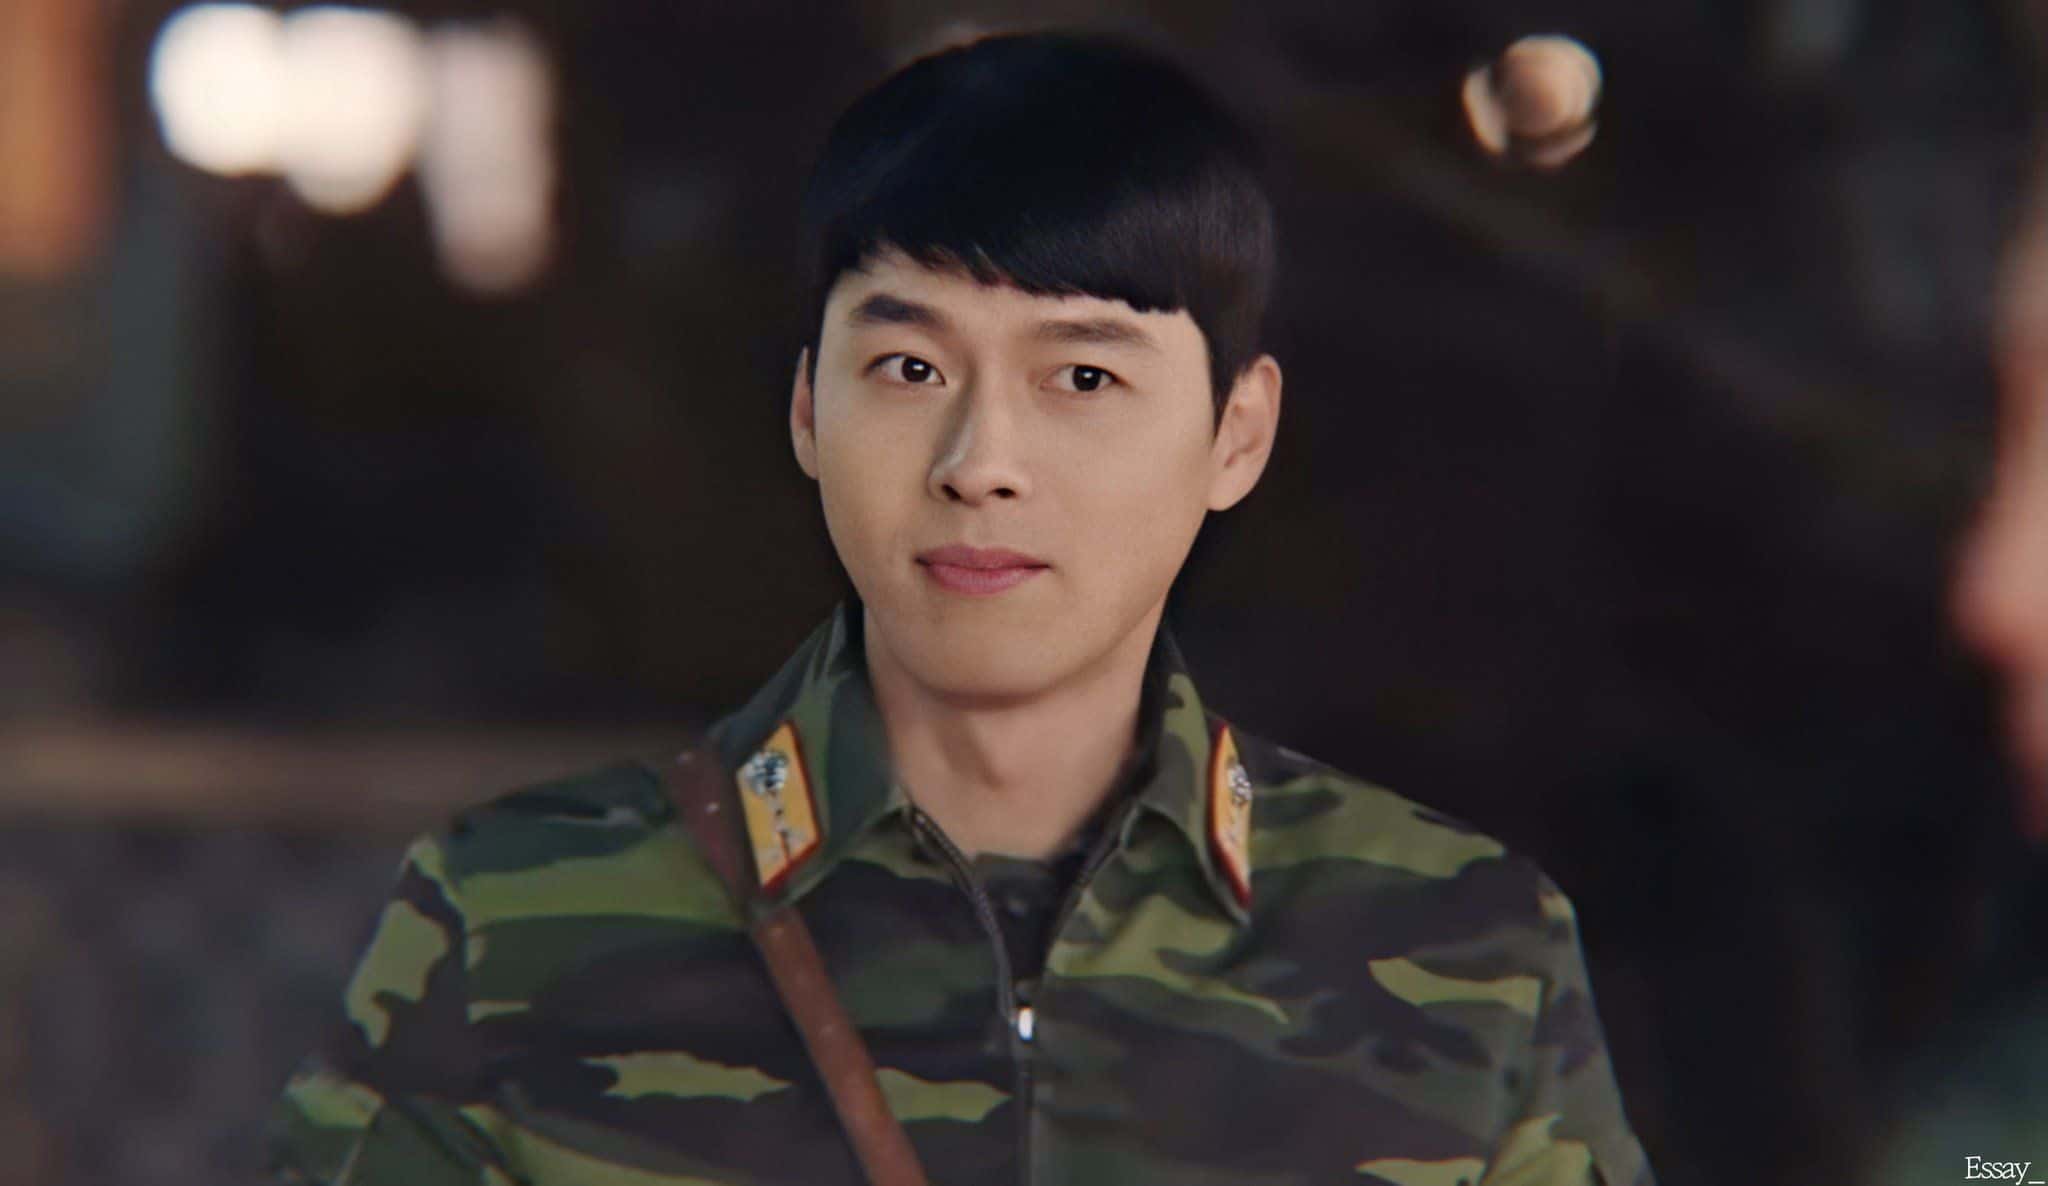 Hyun Bin playing the lead role in the drama Crash Landing on You